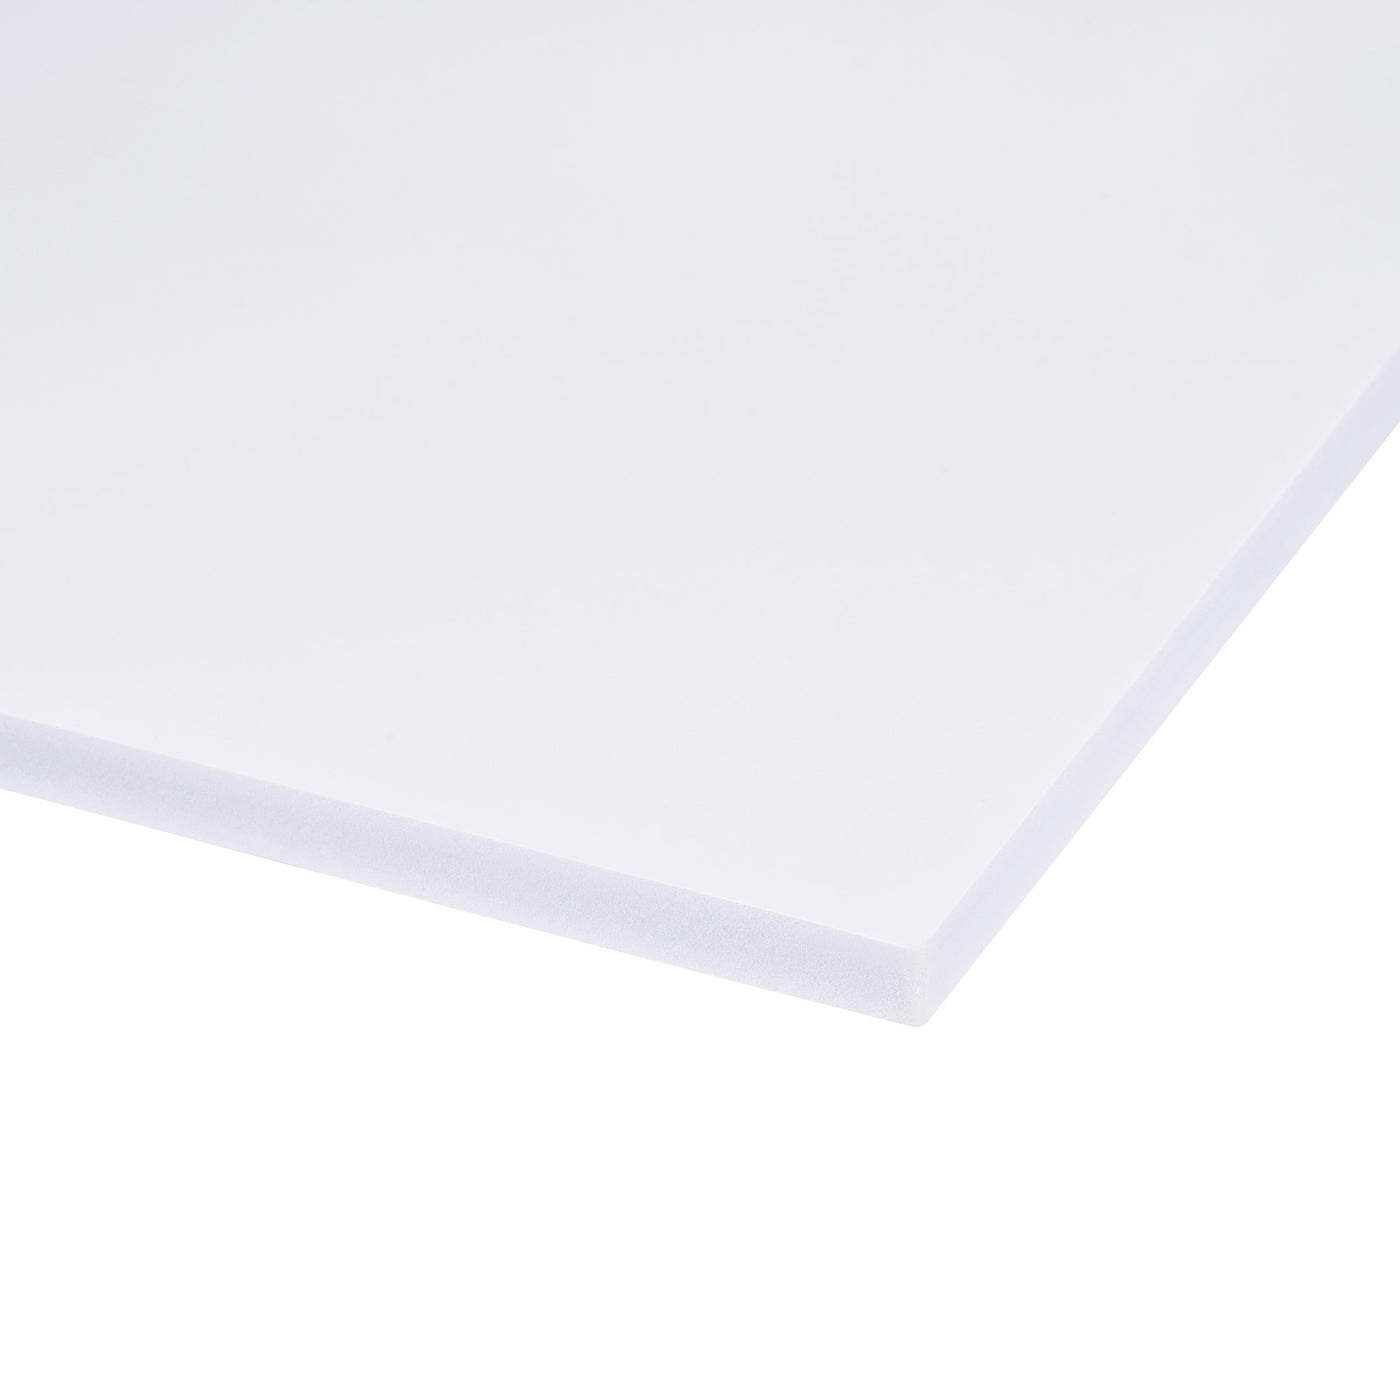 uxcell Uxcell PVC Foam Board Sheet,12mm x 300mm x 300mm,White,Double Sided,2pcs